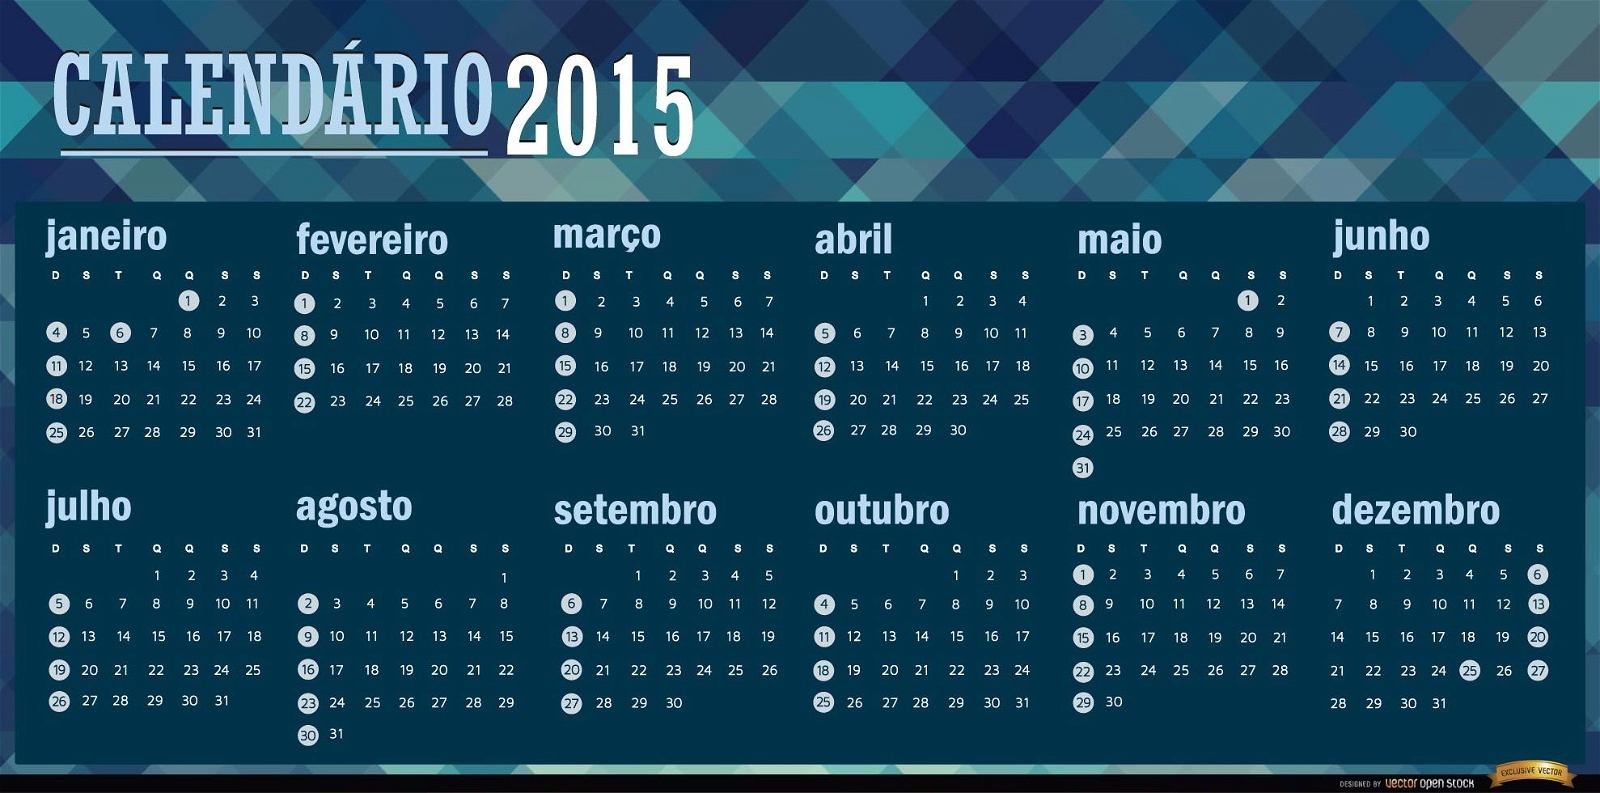 2015 calendario azul poligonal portugu?s